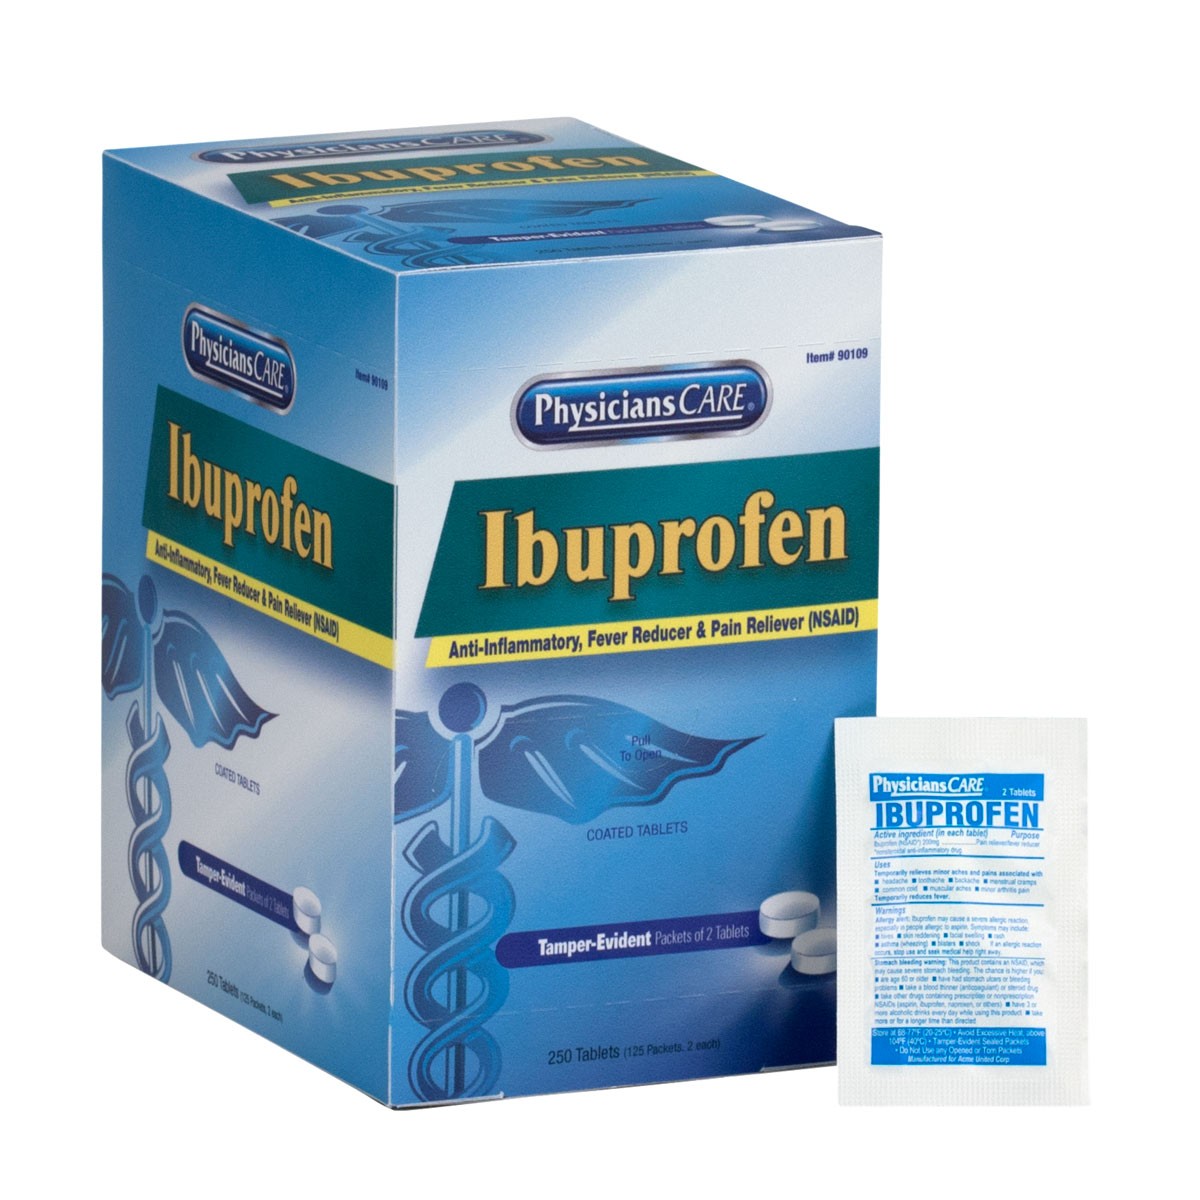 PhysiciansCare 200mg Ibuprofen, 125x2/Box